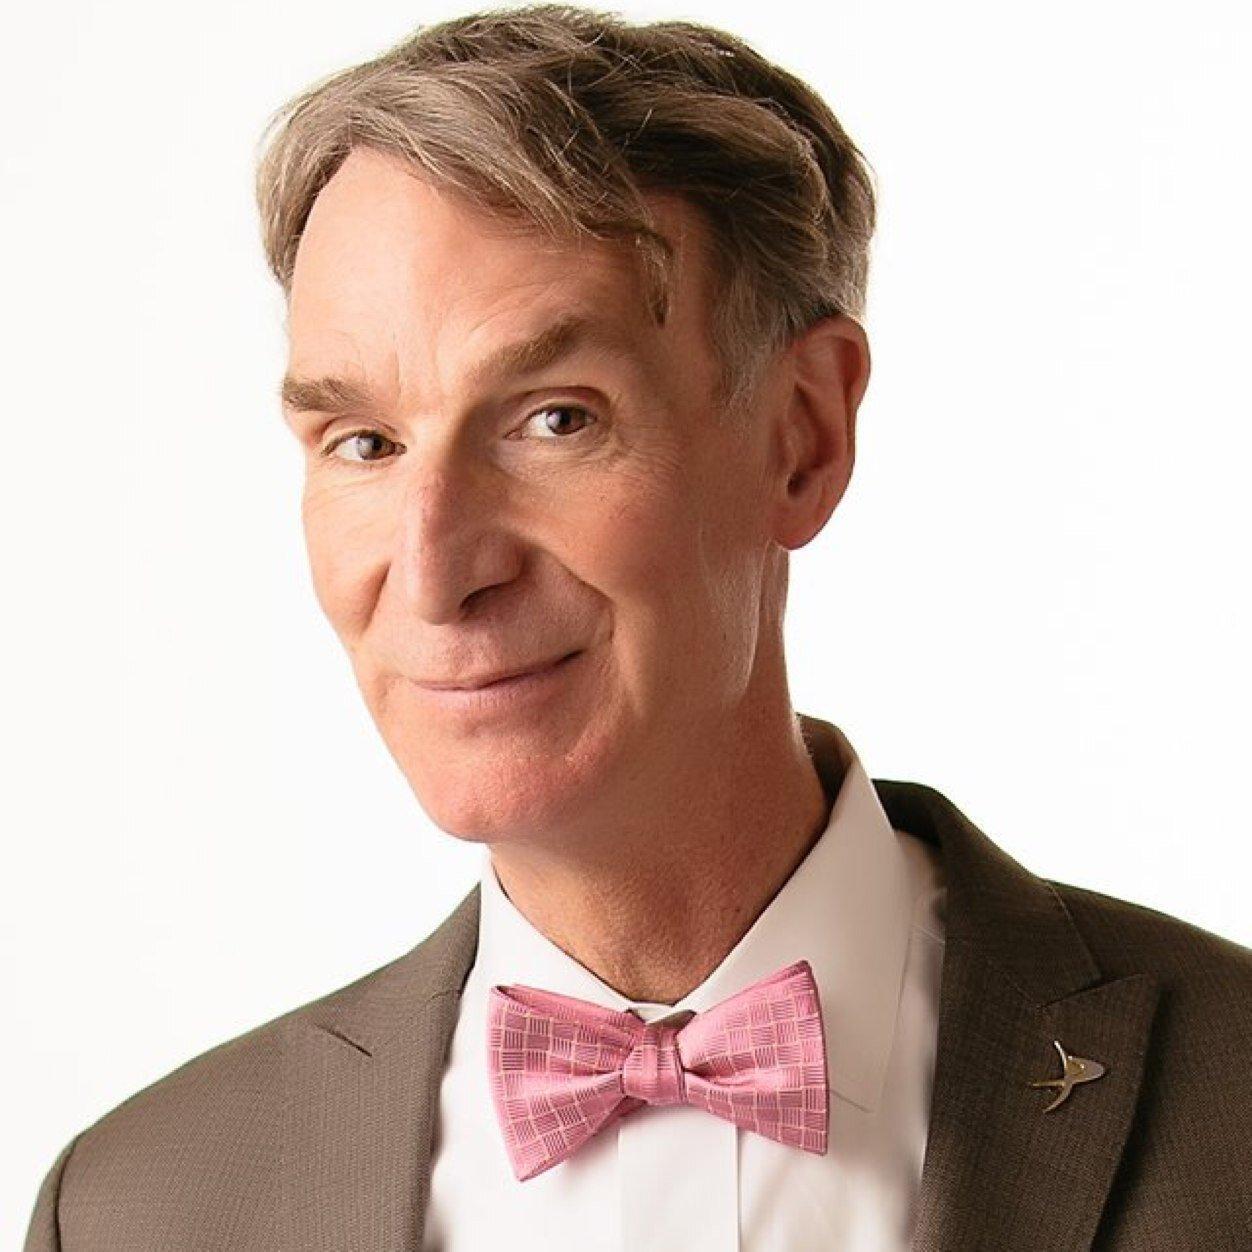 Bill Nye, "The Science Guy"